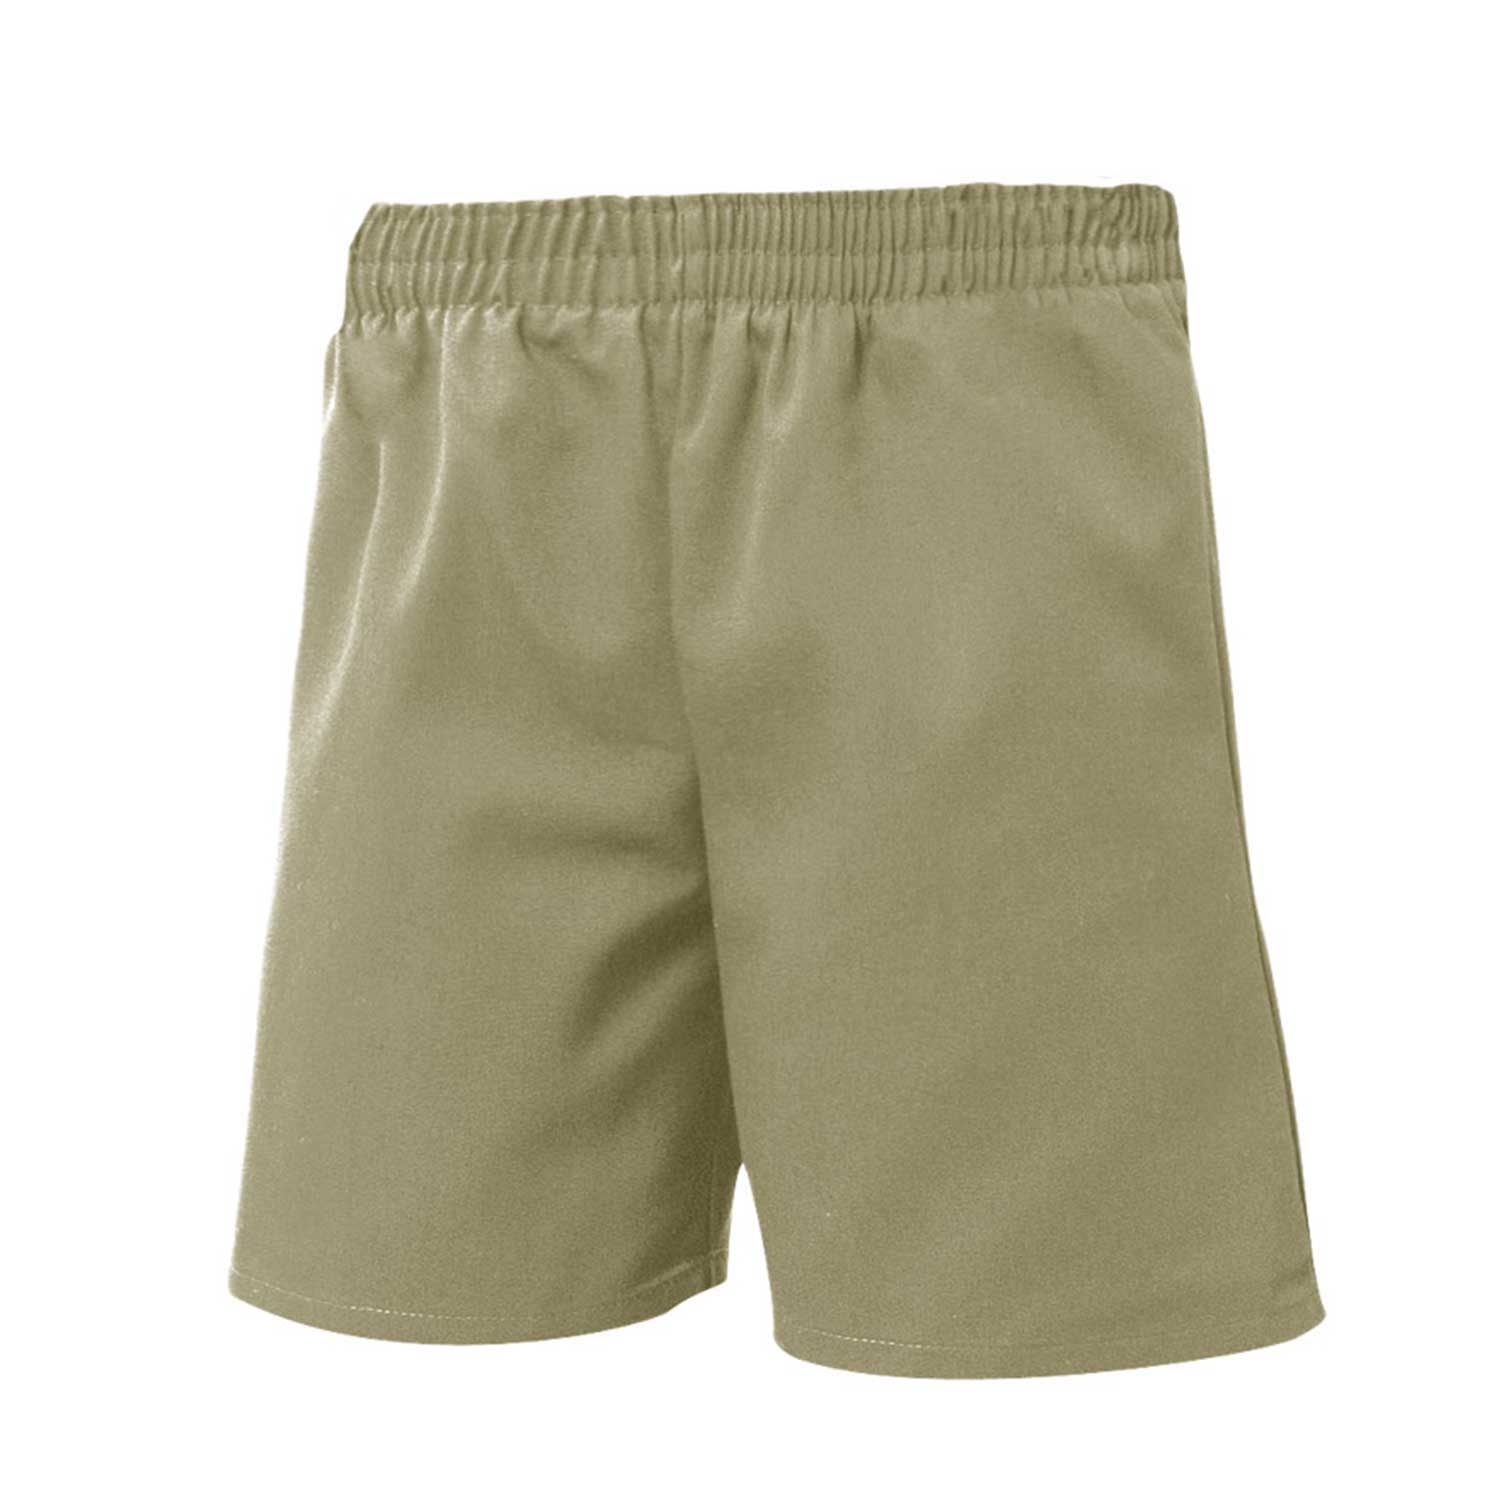 Unisex Pull-On Shorts - All Around Elastic - #1251/7067